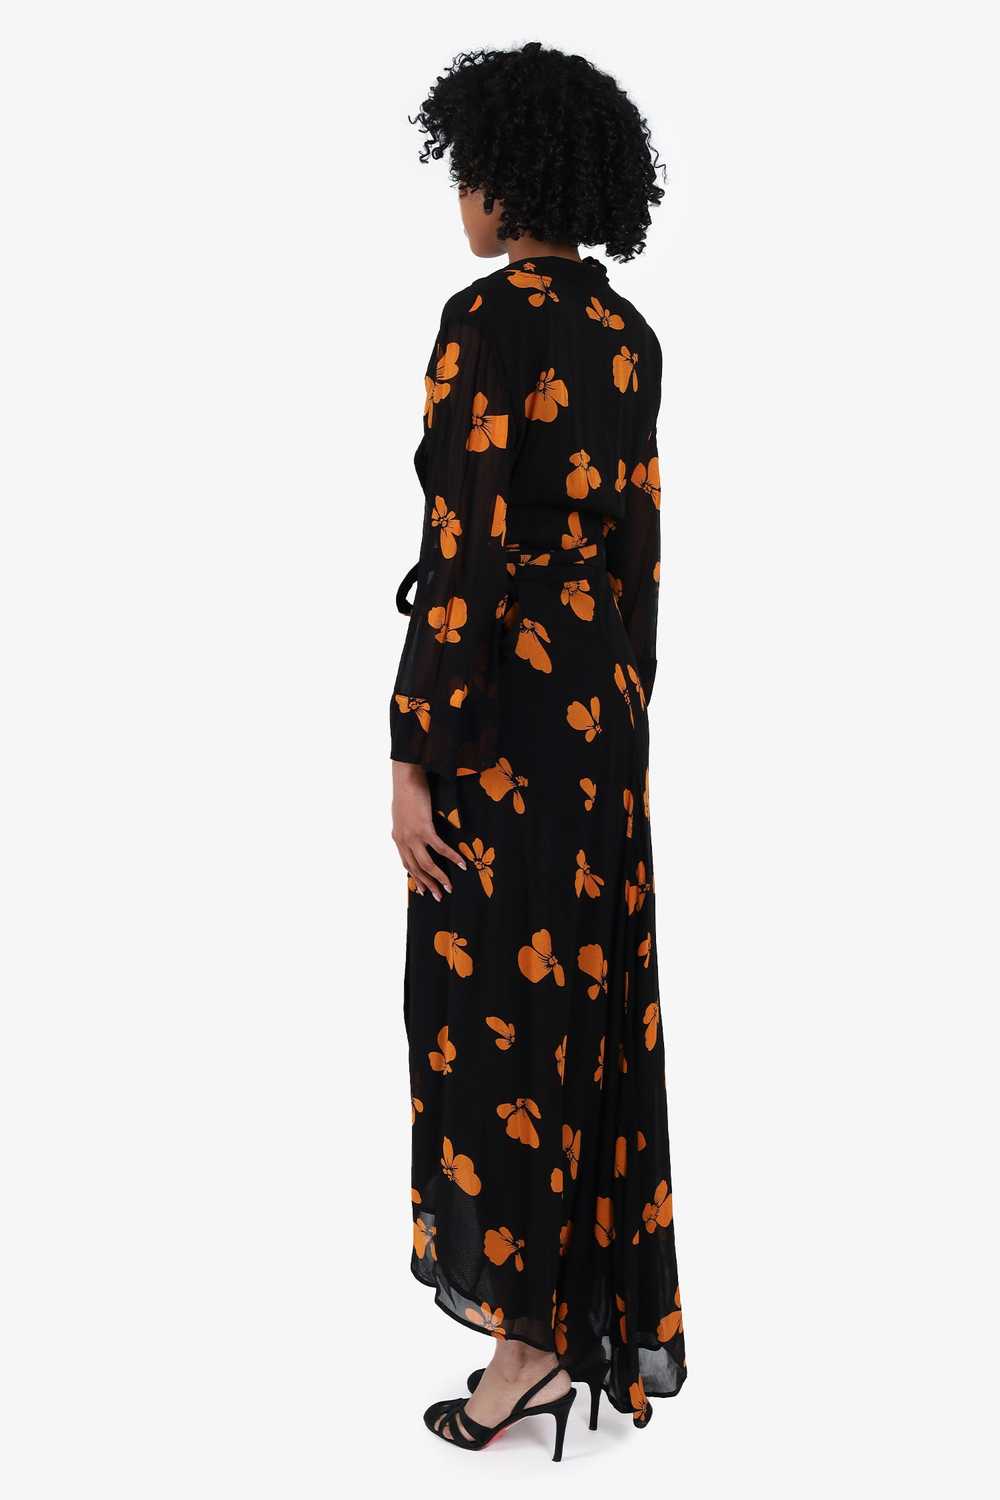 Ganni Black/Orange Floral Print Wrap Dress Size 36 - image 3